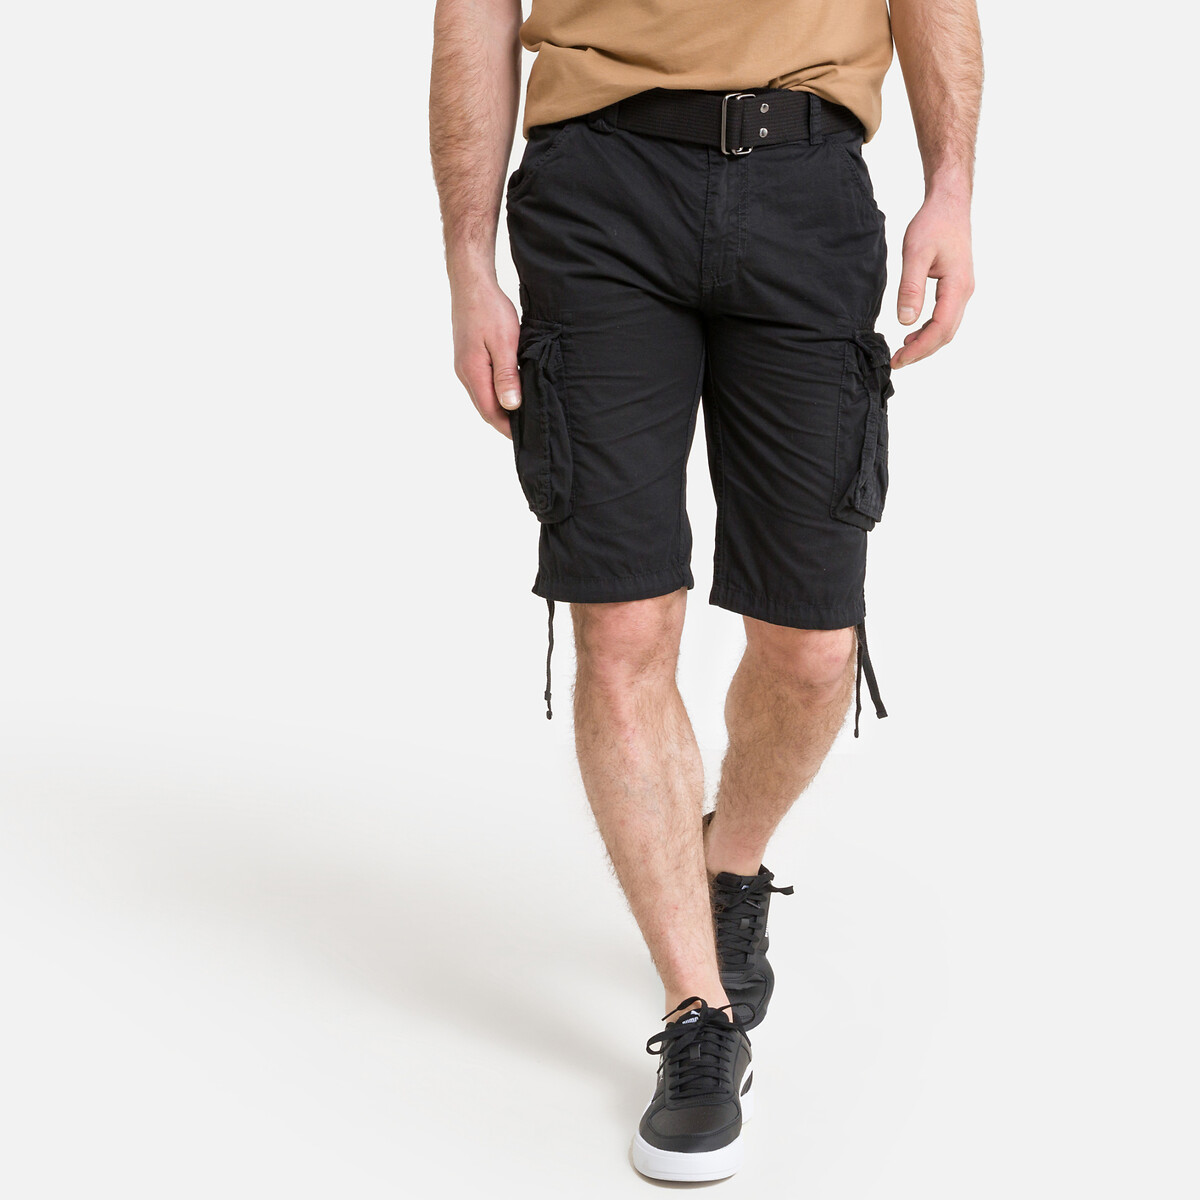 Image of Tr Ranger 30 Cotton Bermuda Shorts with Belt